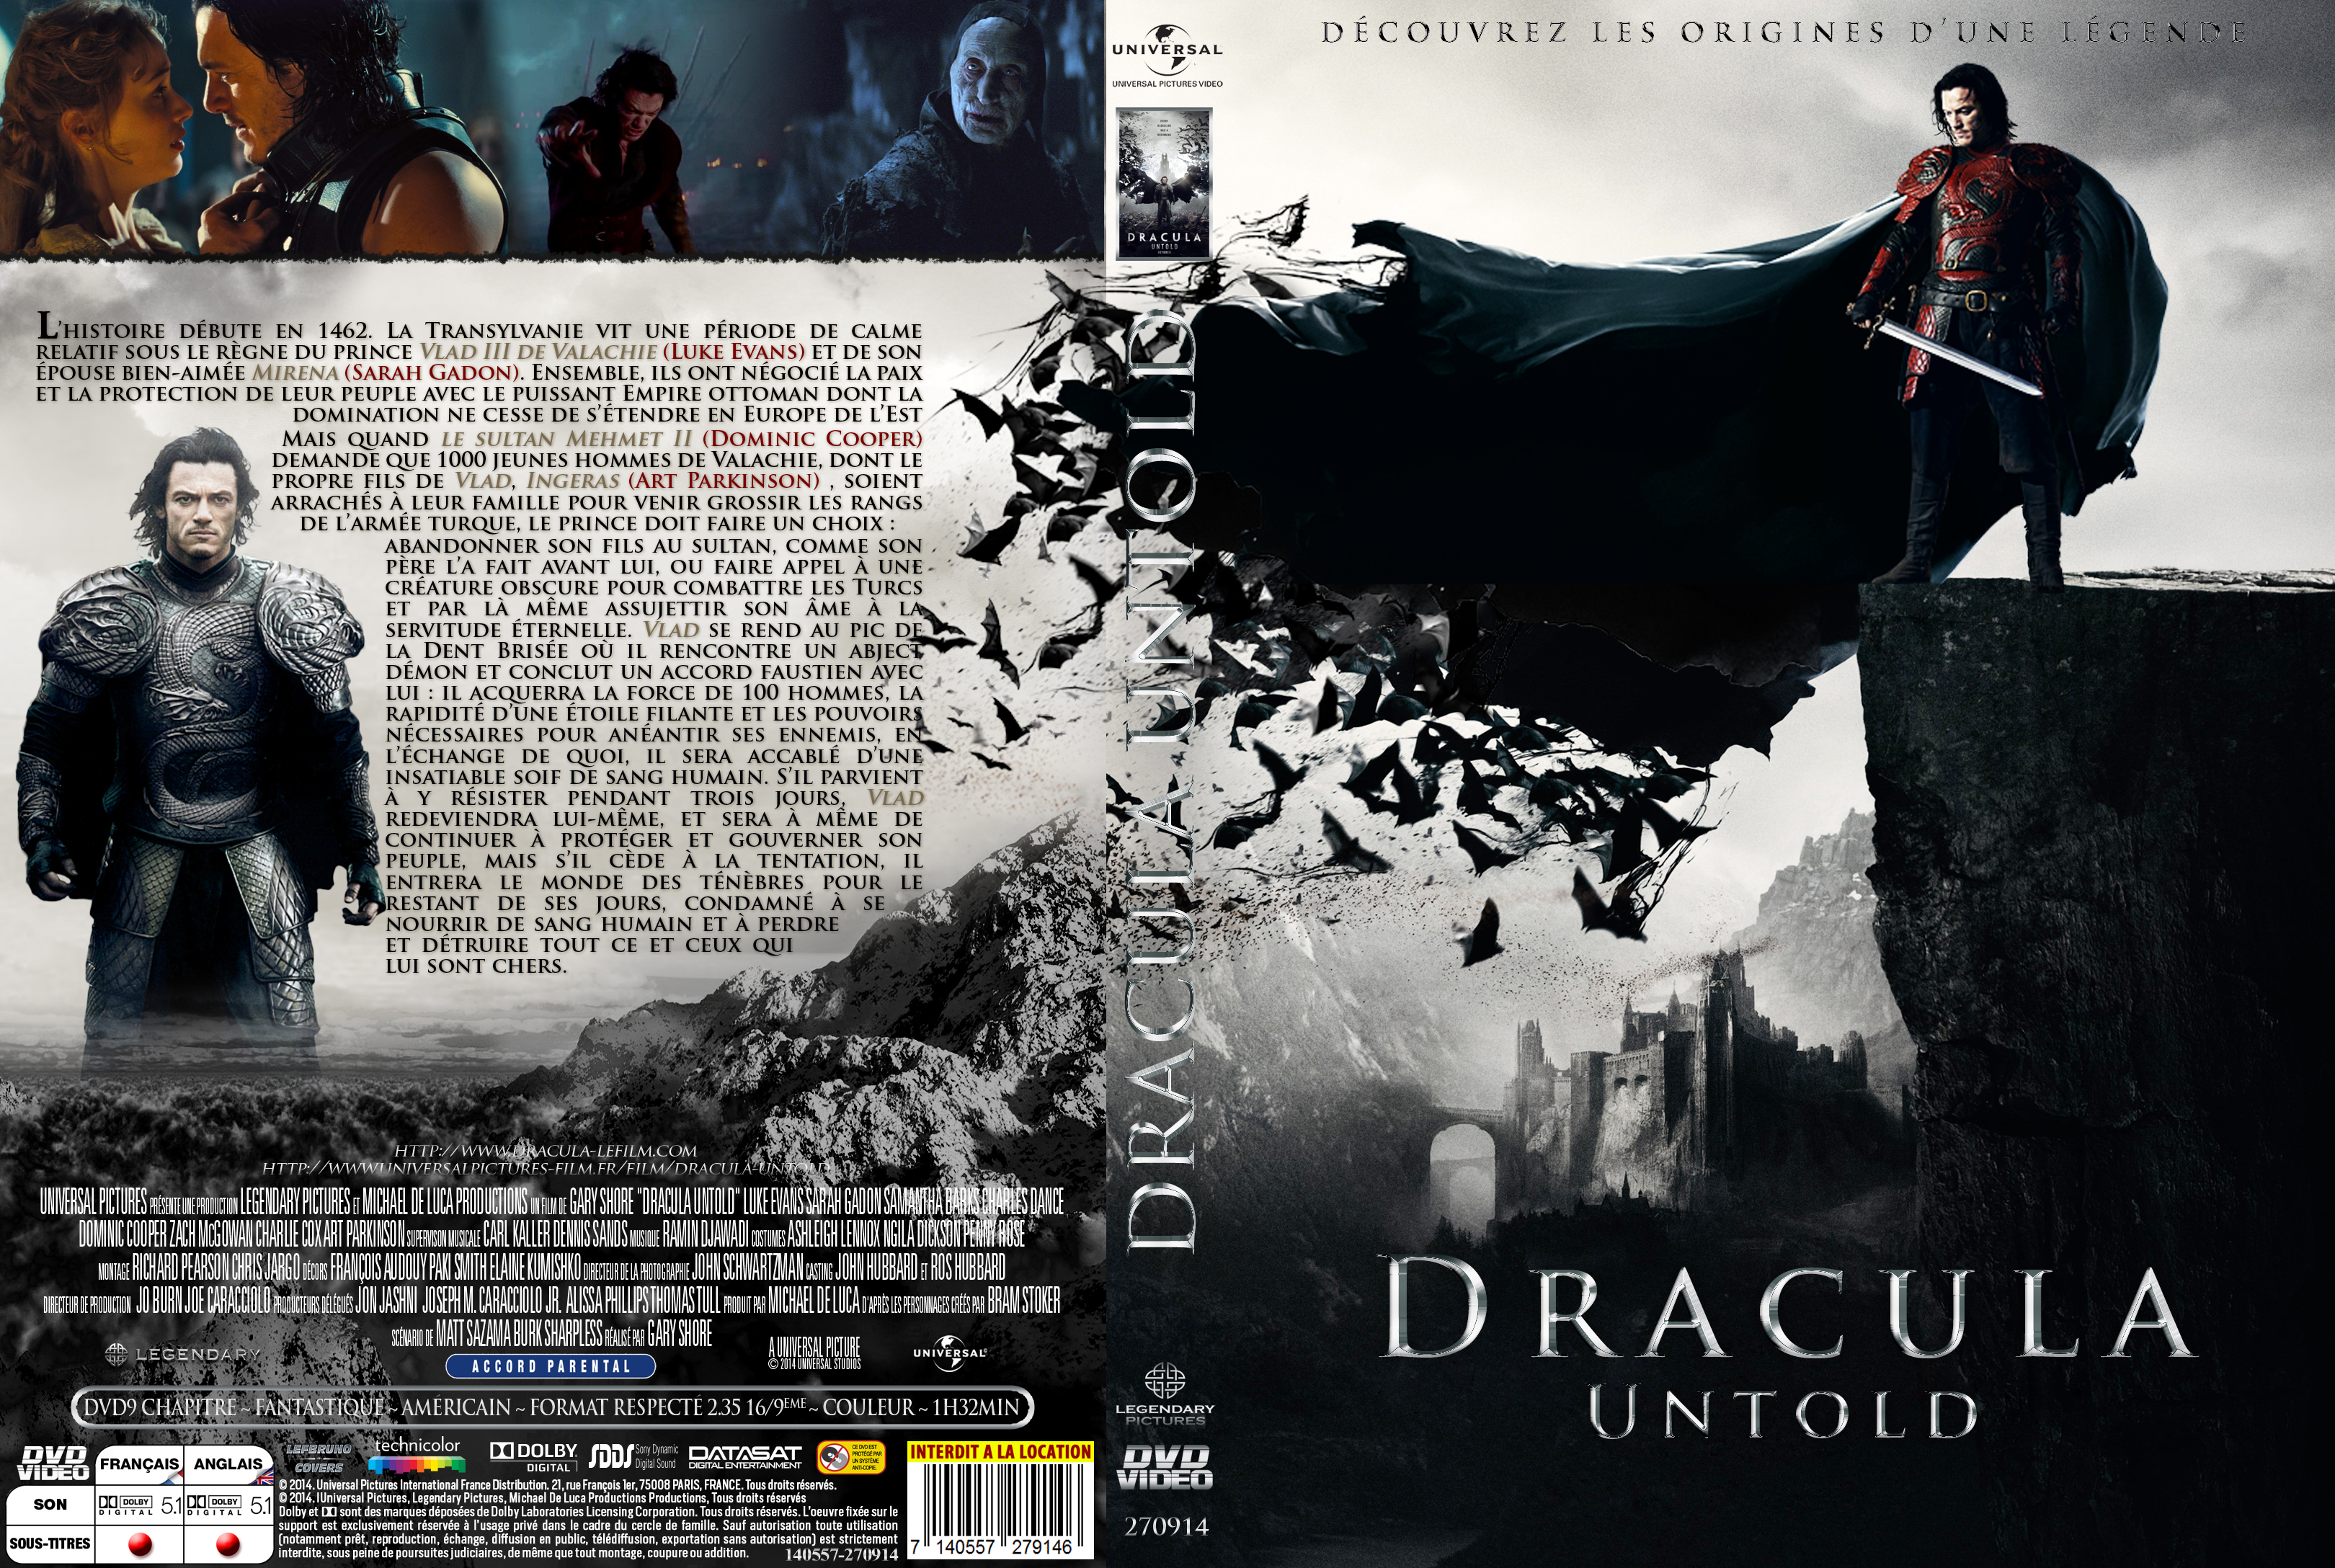 Jaquette DVD Dracula Untold custom